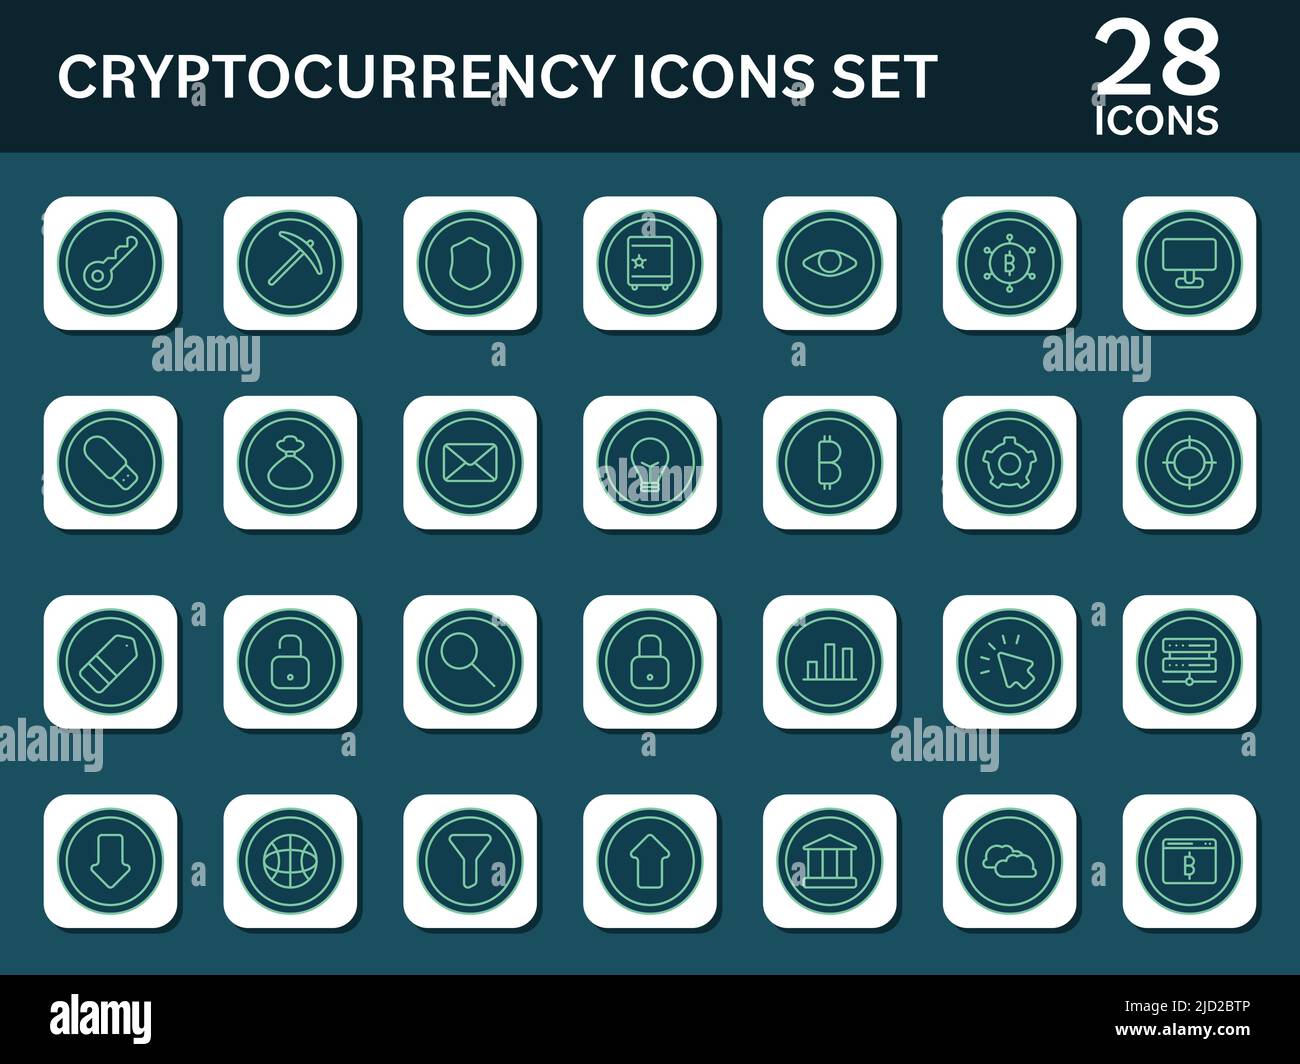 Cryptocurrency Business Essential Icon Set in Green Color. Illustrazione Vettoriale